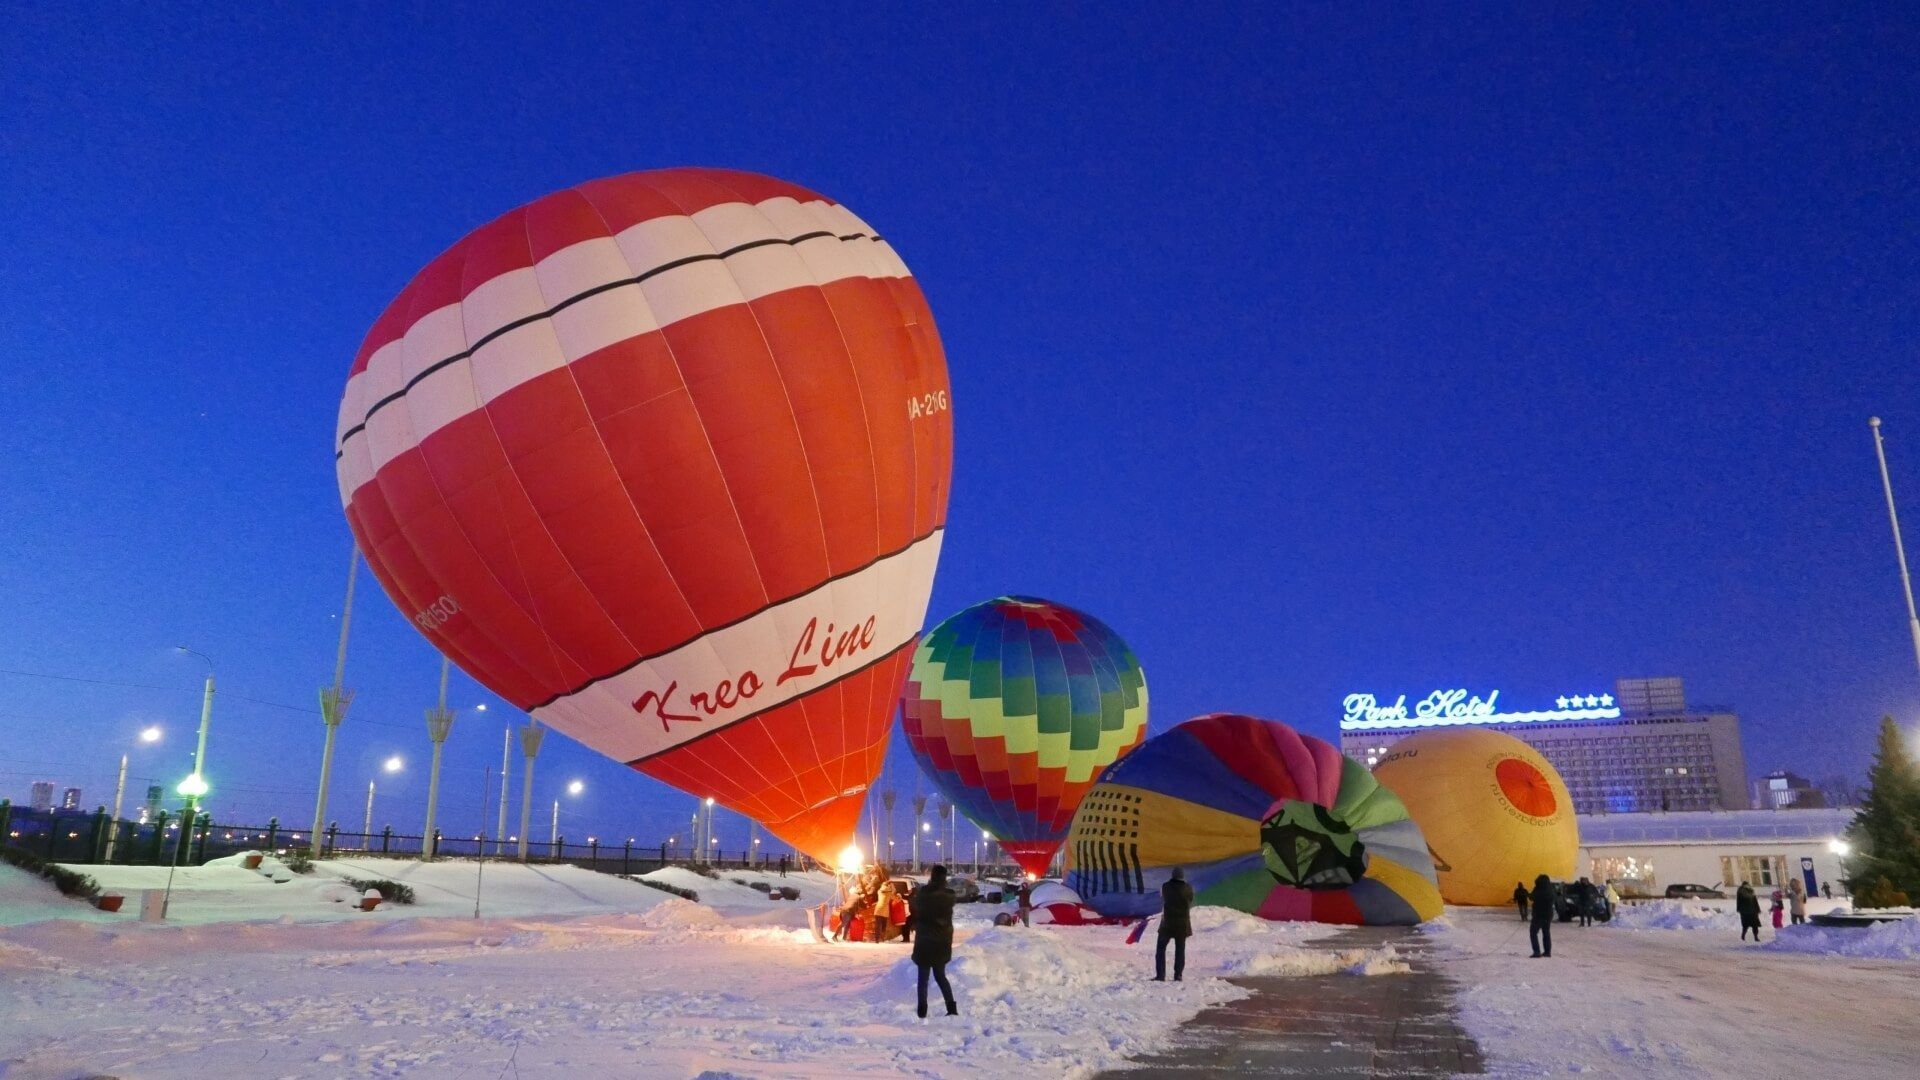 Гонка на воздушных шарах. Гонки на воздушных шарах. Полет на воздушном шаре Нижний Новгород. Нижегородские воздушный шары. Гонка воздушных шаров в Нижнем Новгороде.